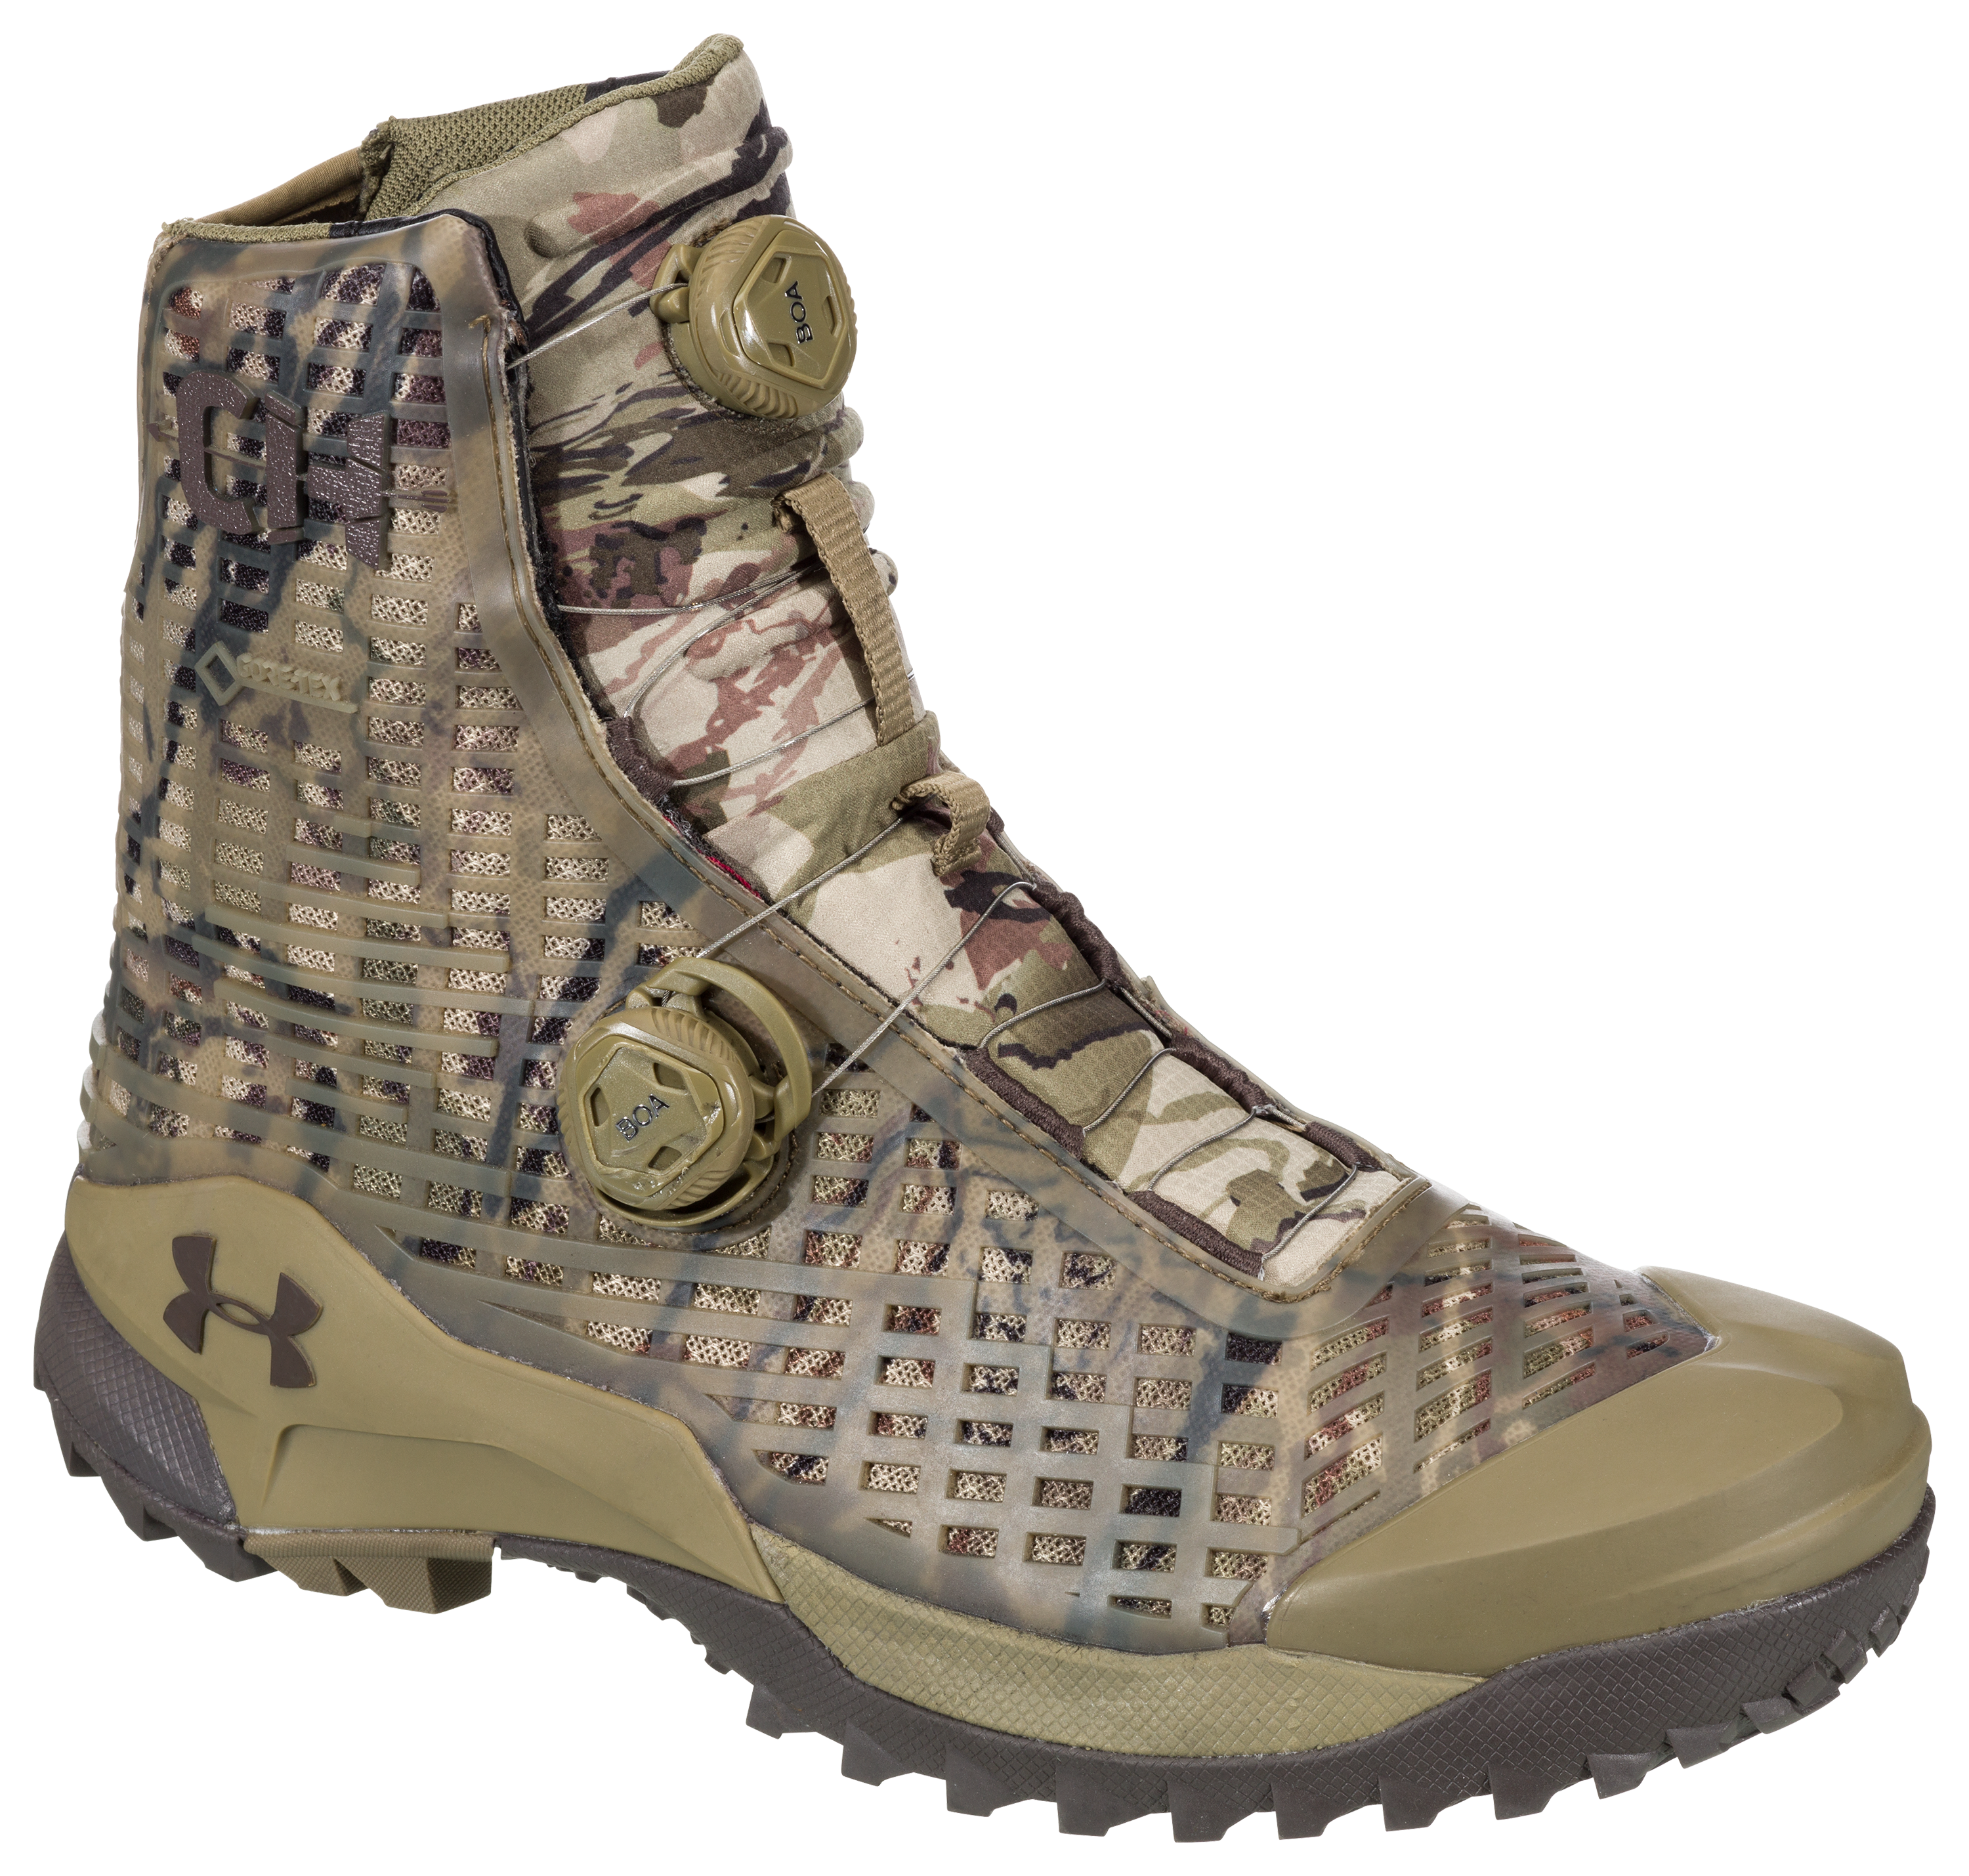 Under Armour CH1 GTX GORE-TEX Tactical Boots  for Men - Bayou Ridge Reaper Camo Barren - 12M